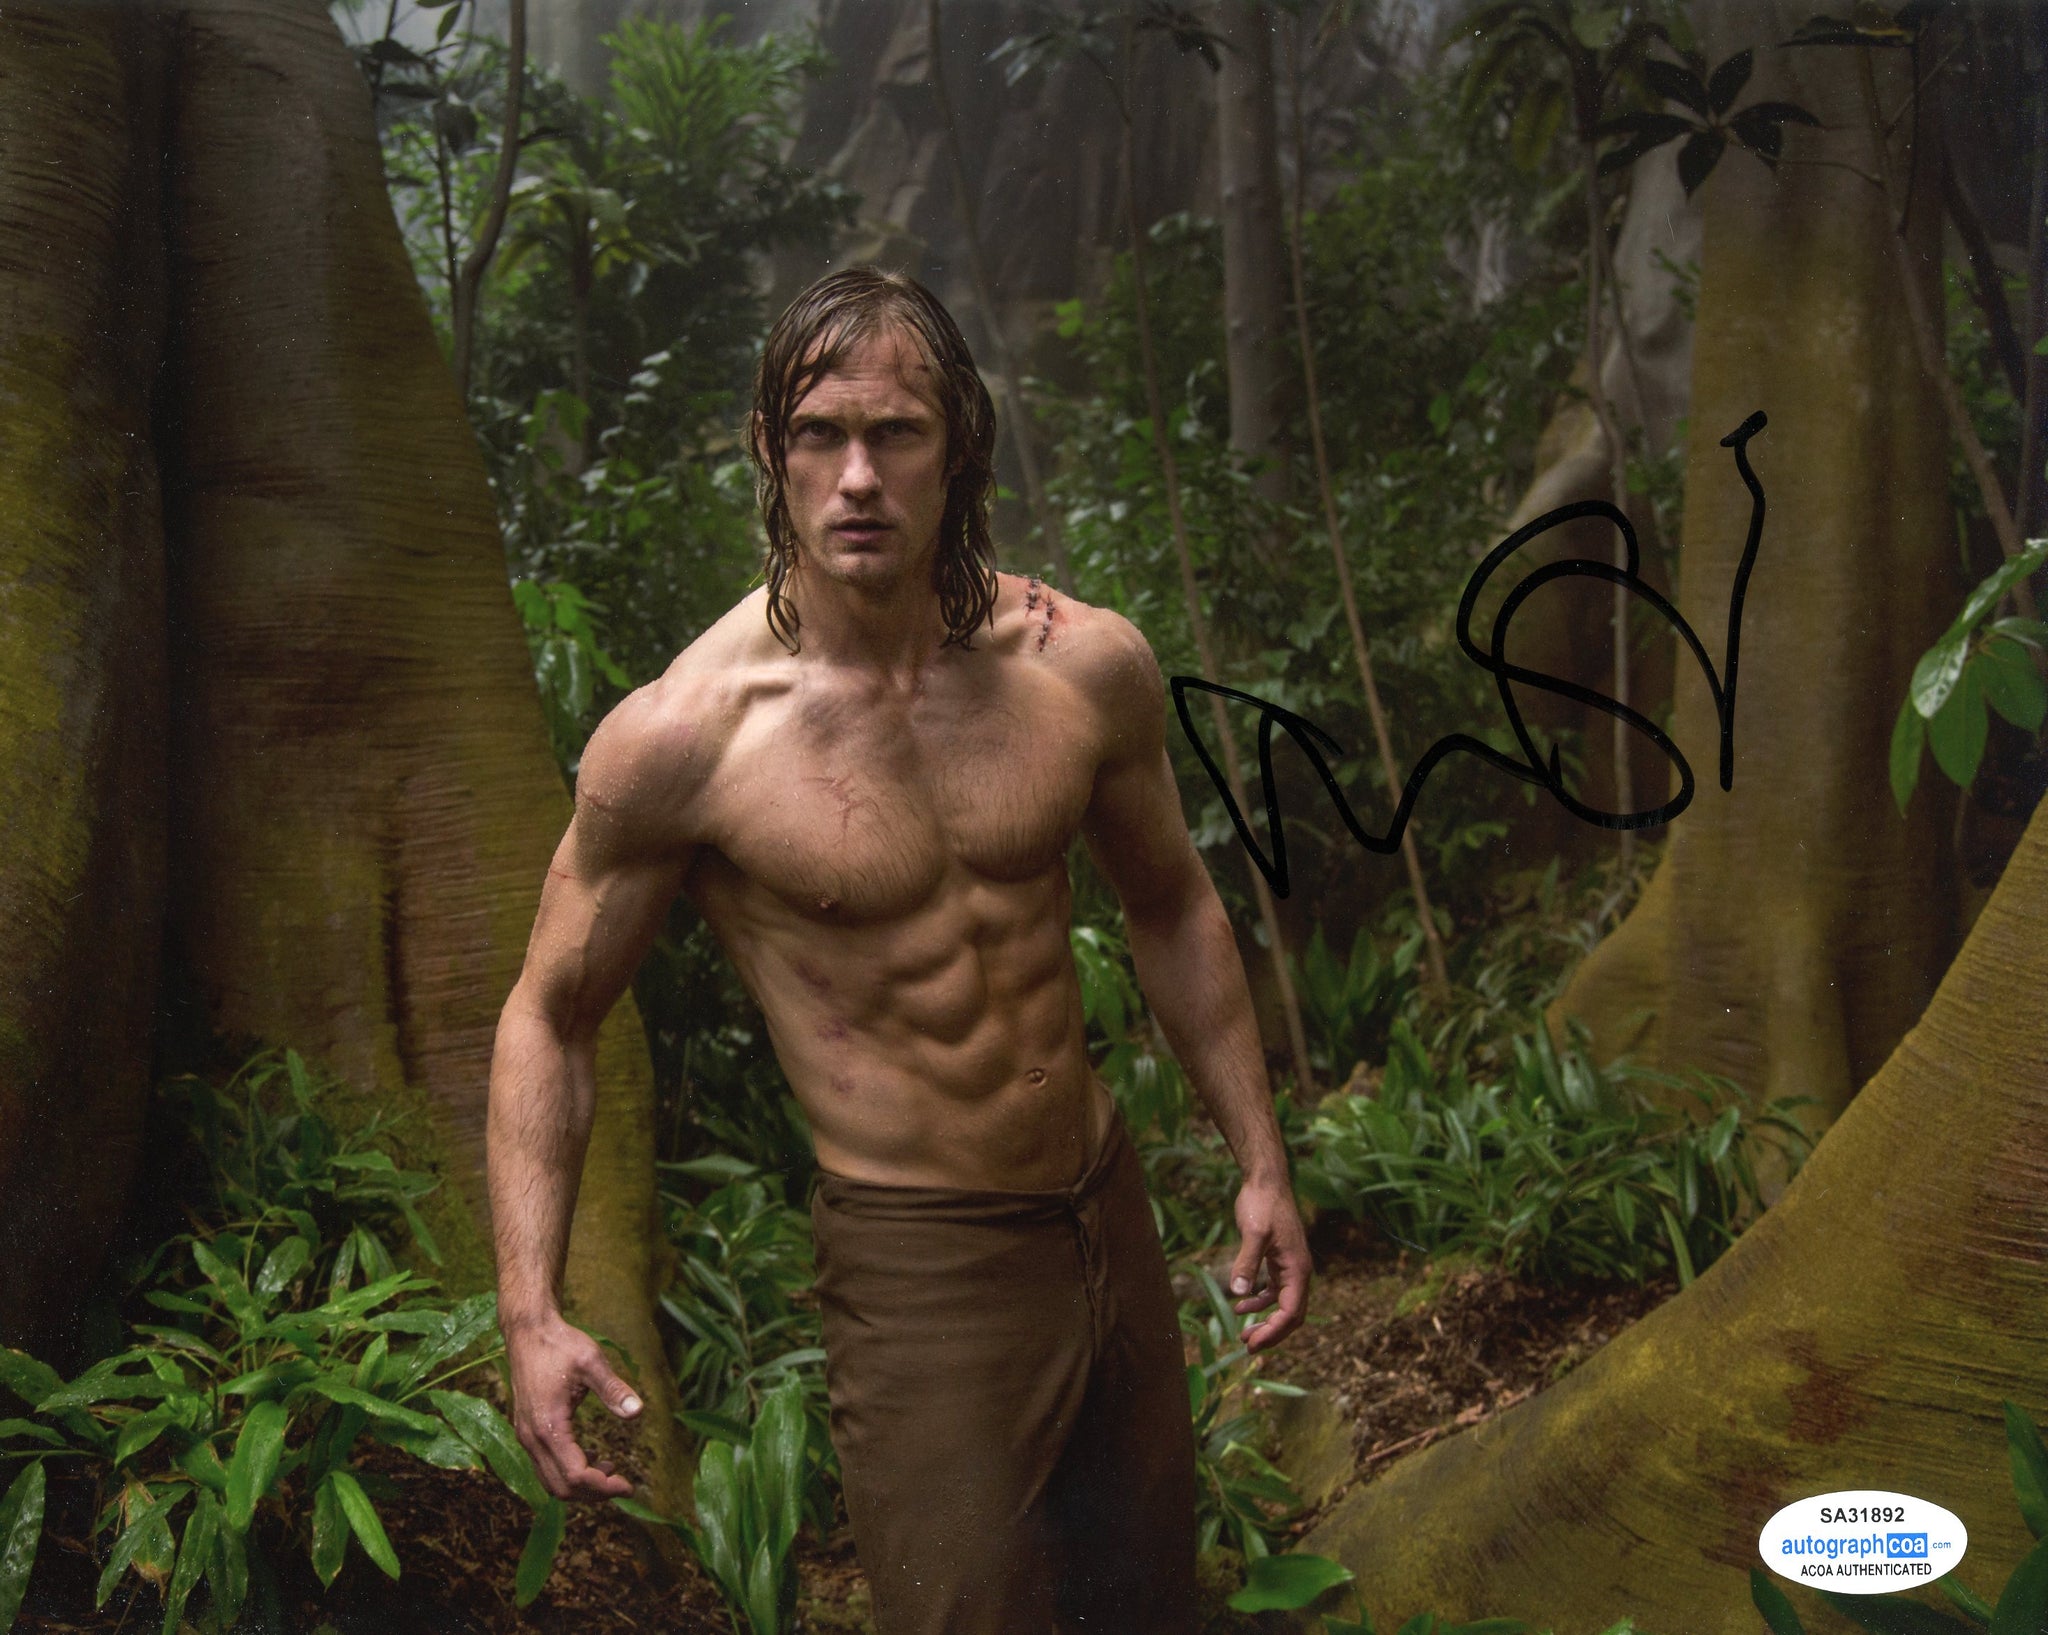 Alexander Alex Skarsgard Tarzan Signed Autograph 8x10 Photo ACOA #7 - Outlaw Hobbies Authentic Autographs